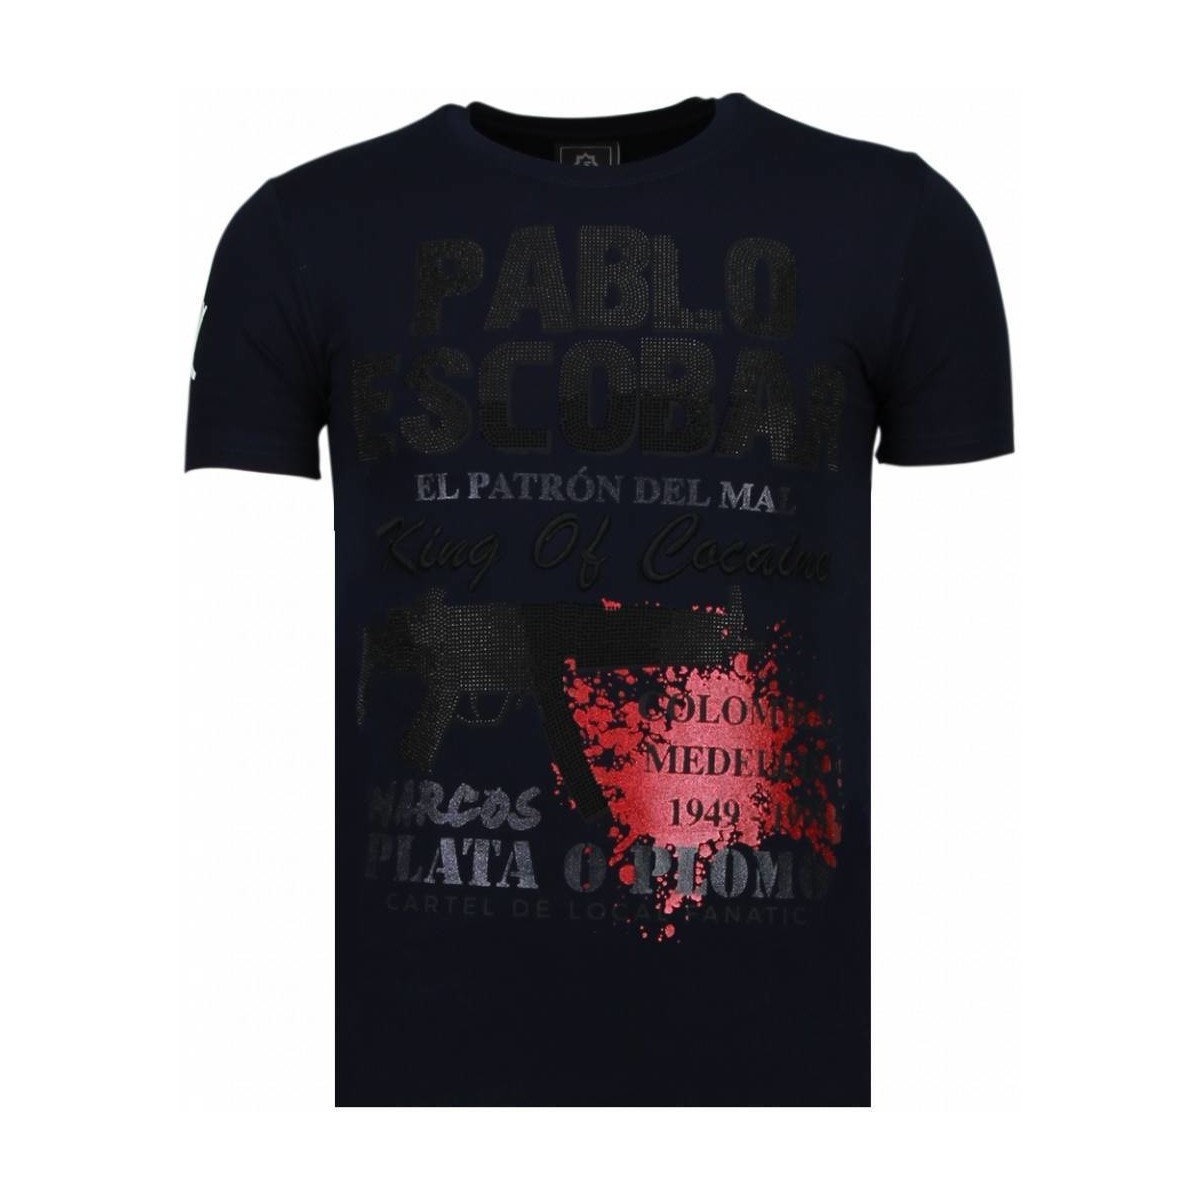 textil Herr T-shirts Local Fanatic Pablo Escobar Narcos Rhinestone Blå